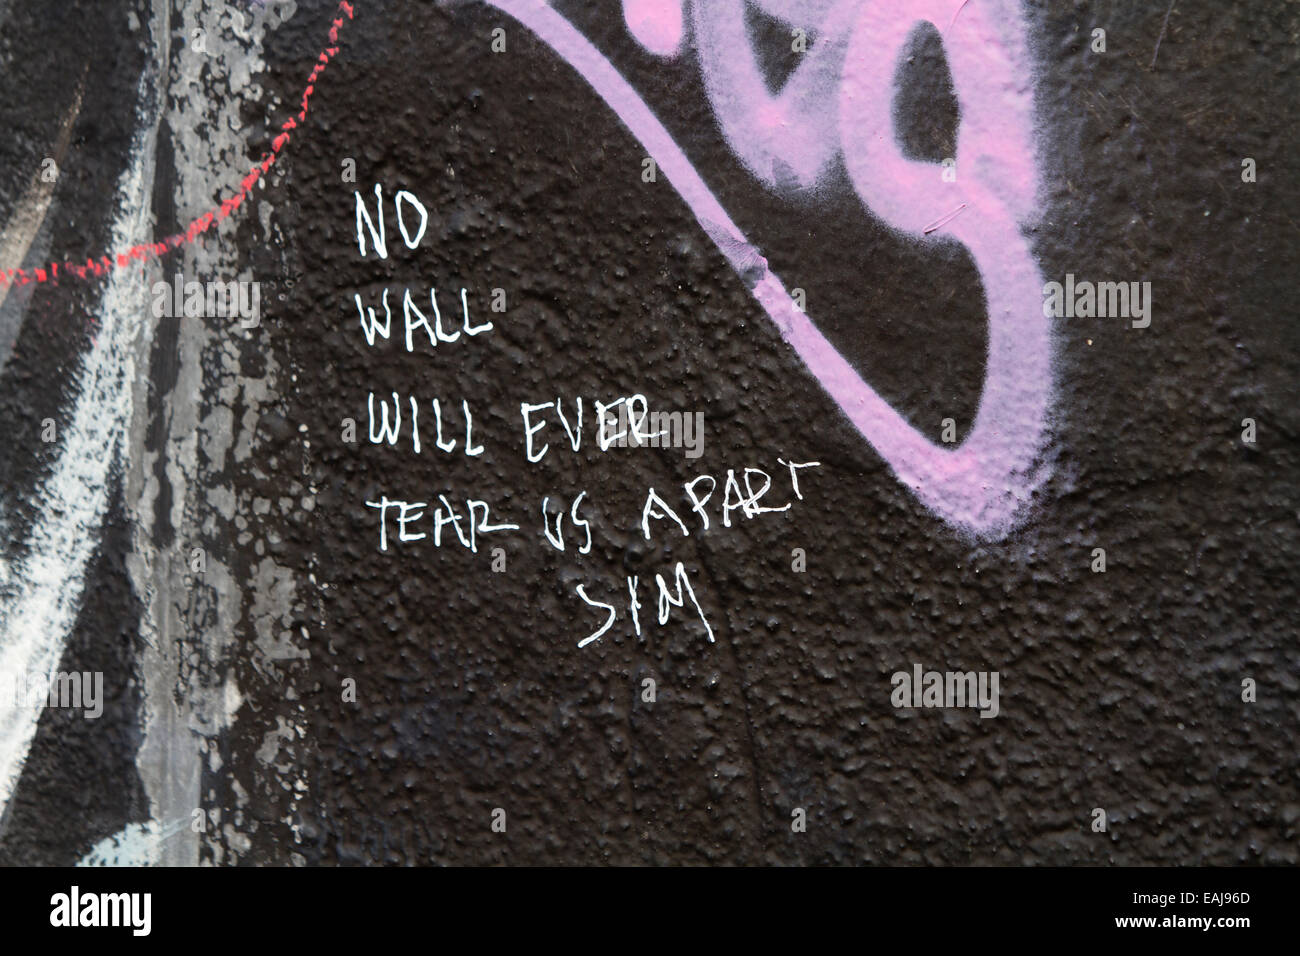 Straße Berlin Graffiti wird keine Mauer tear US apart Stockfoto